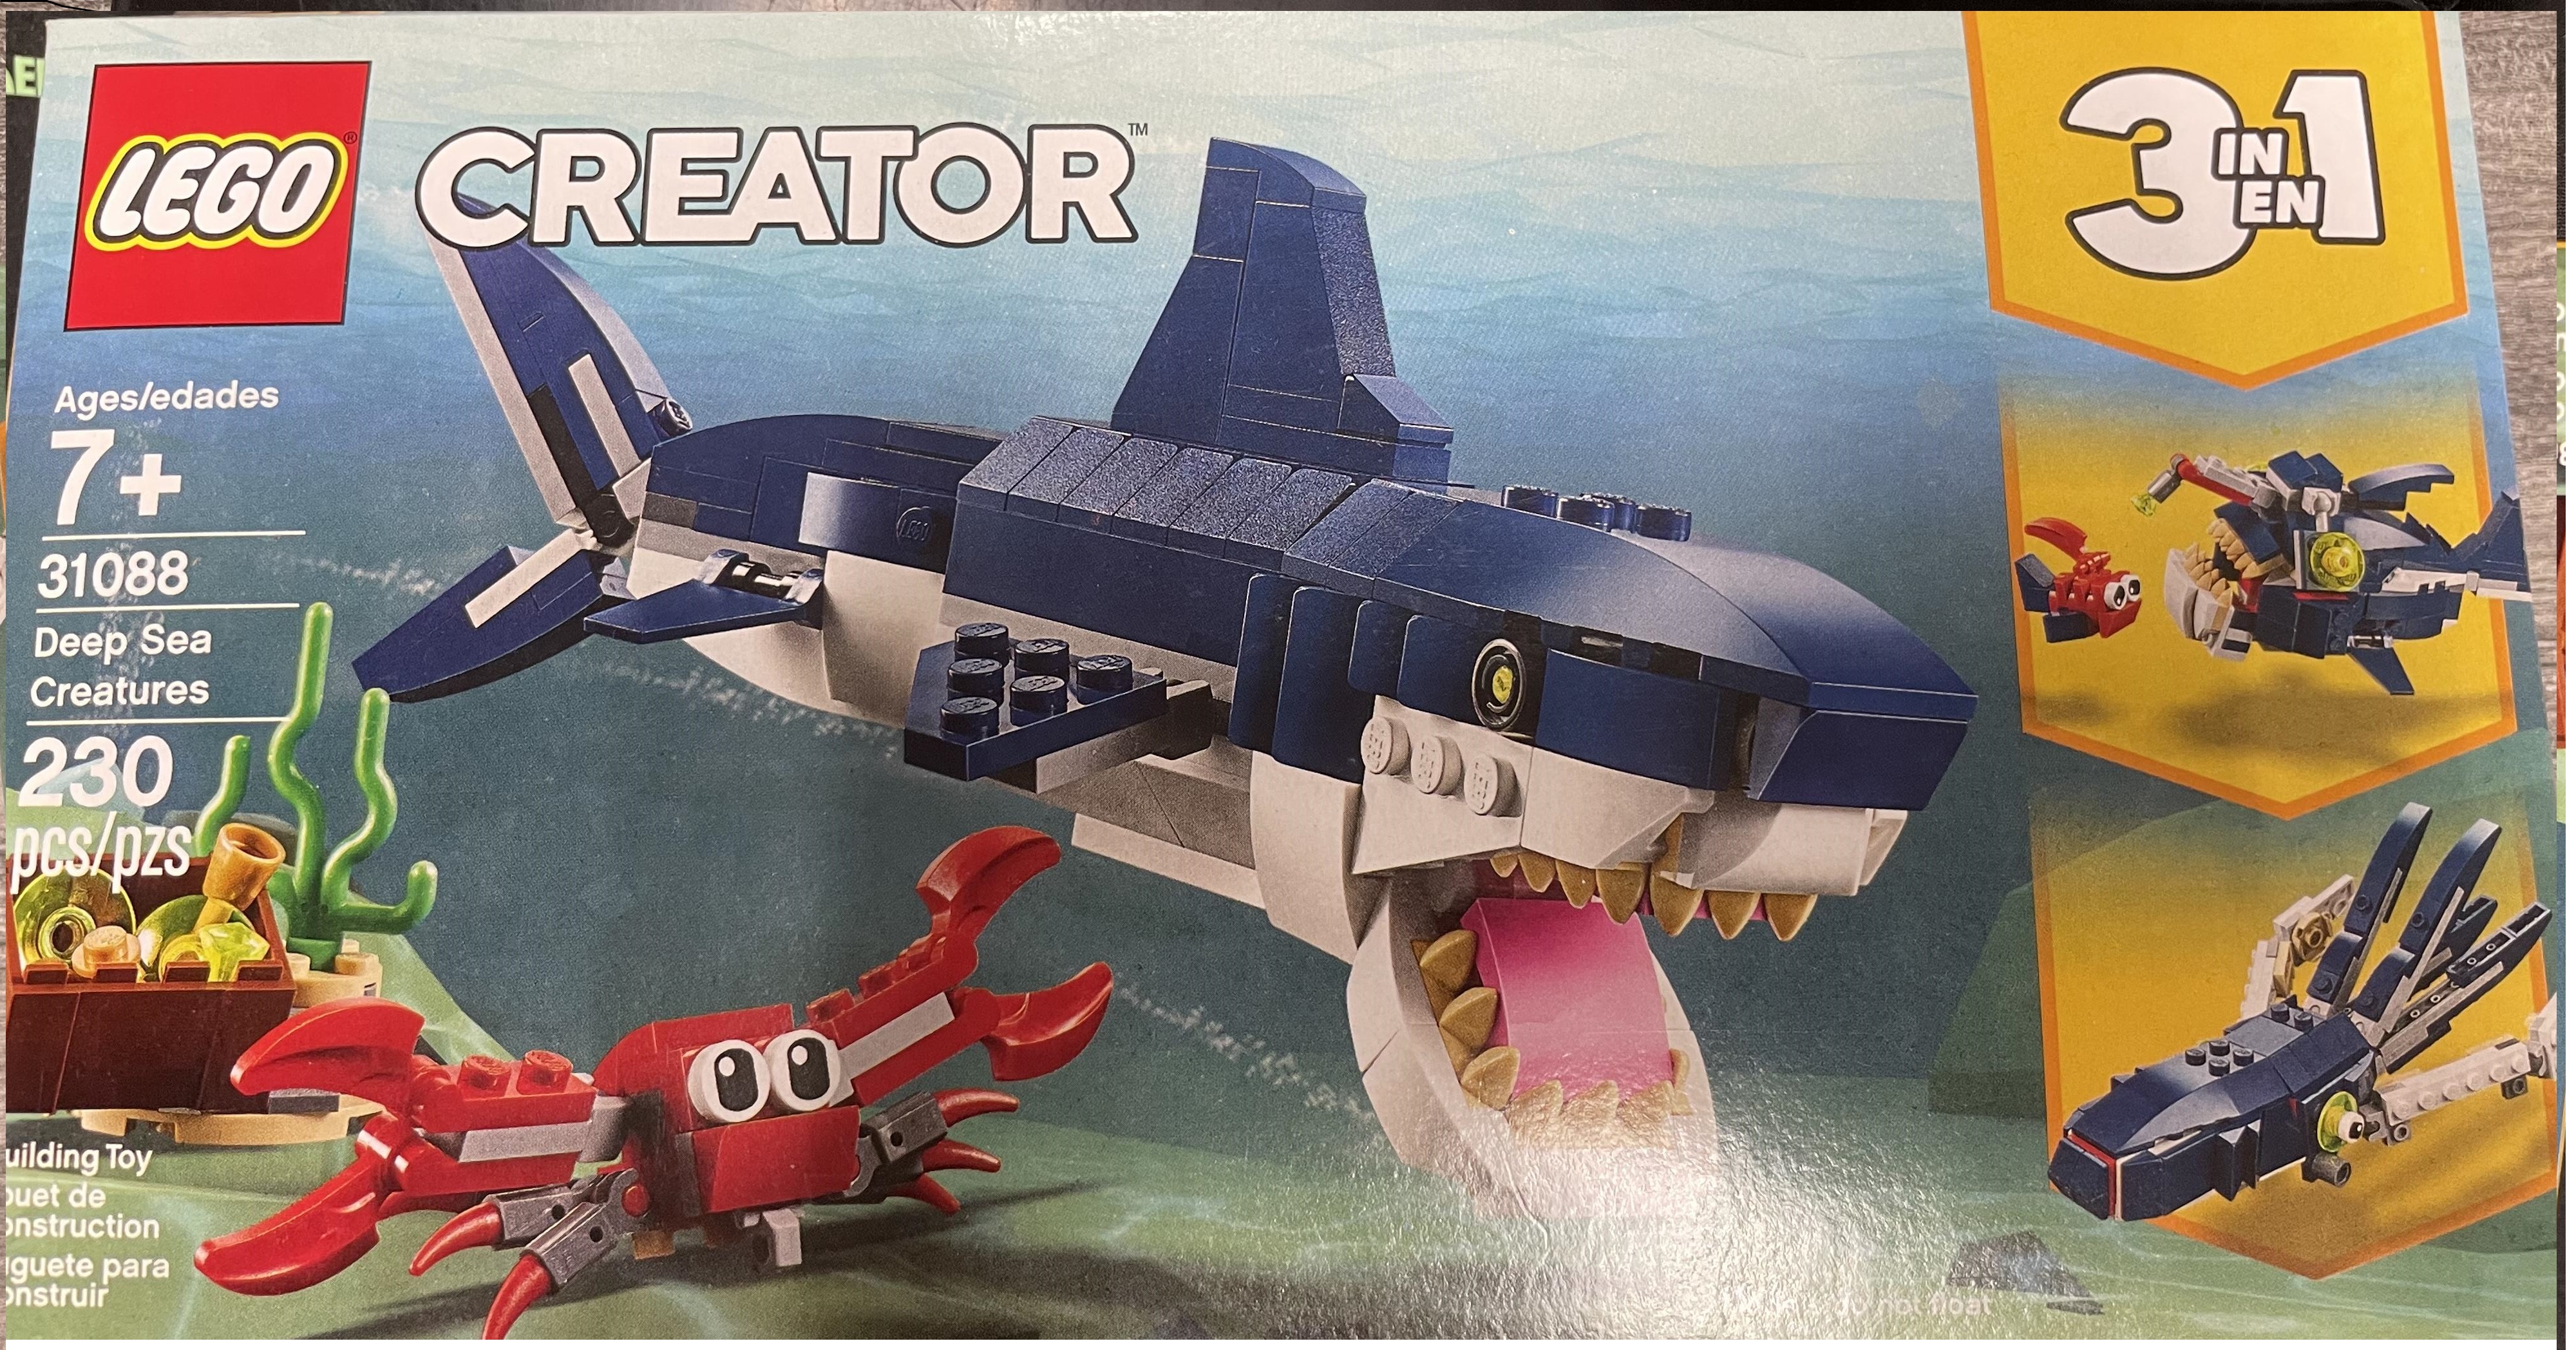 Lego Prize: Creator set